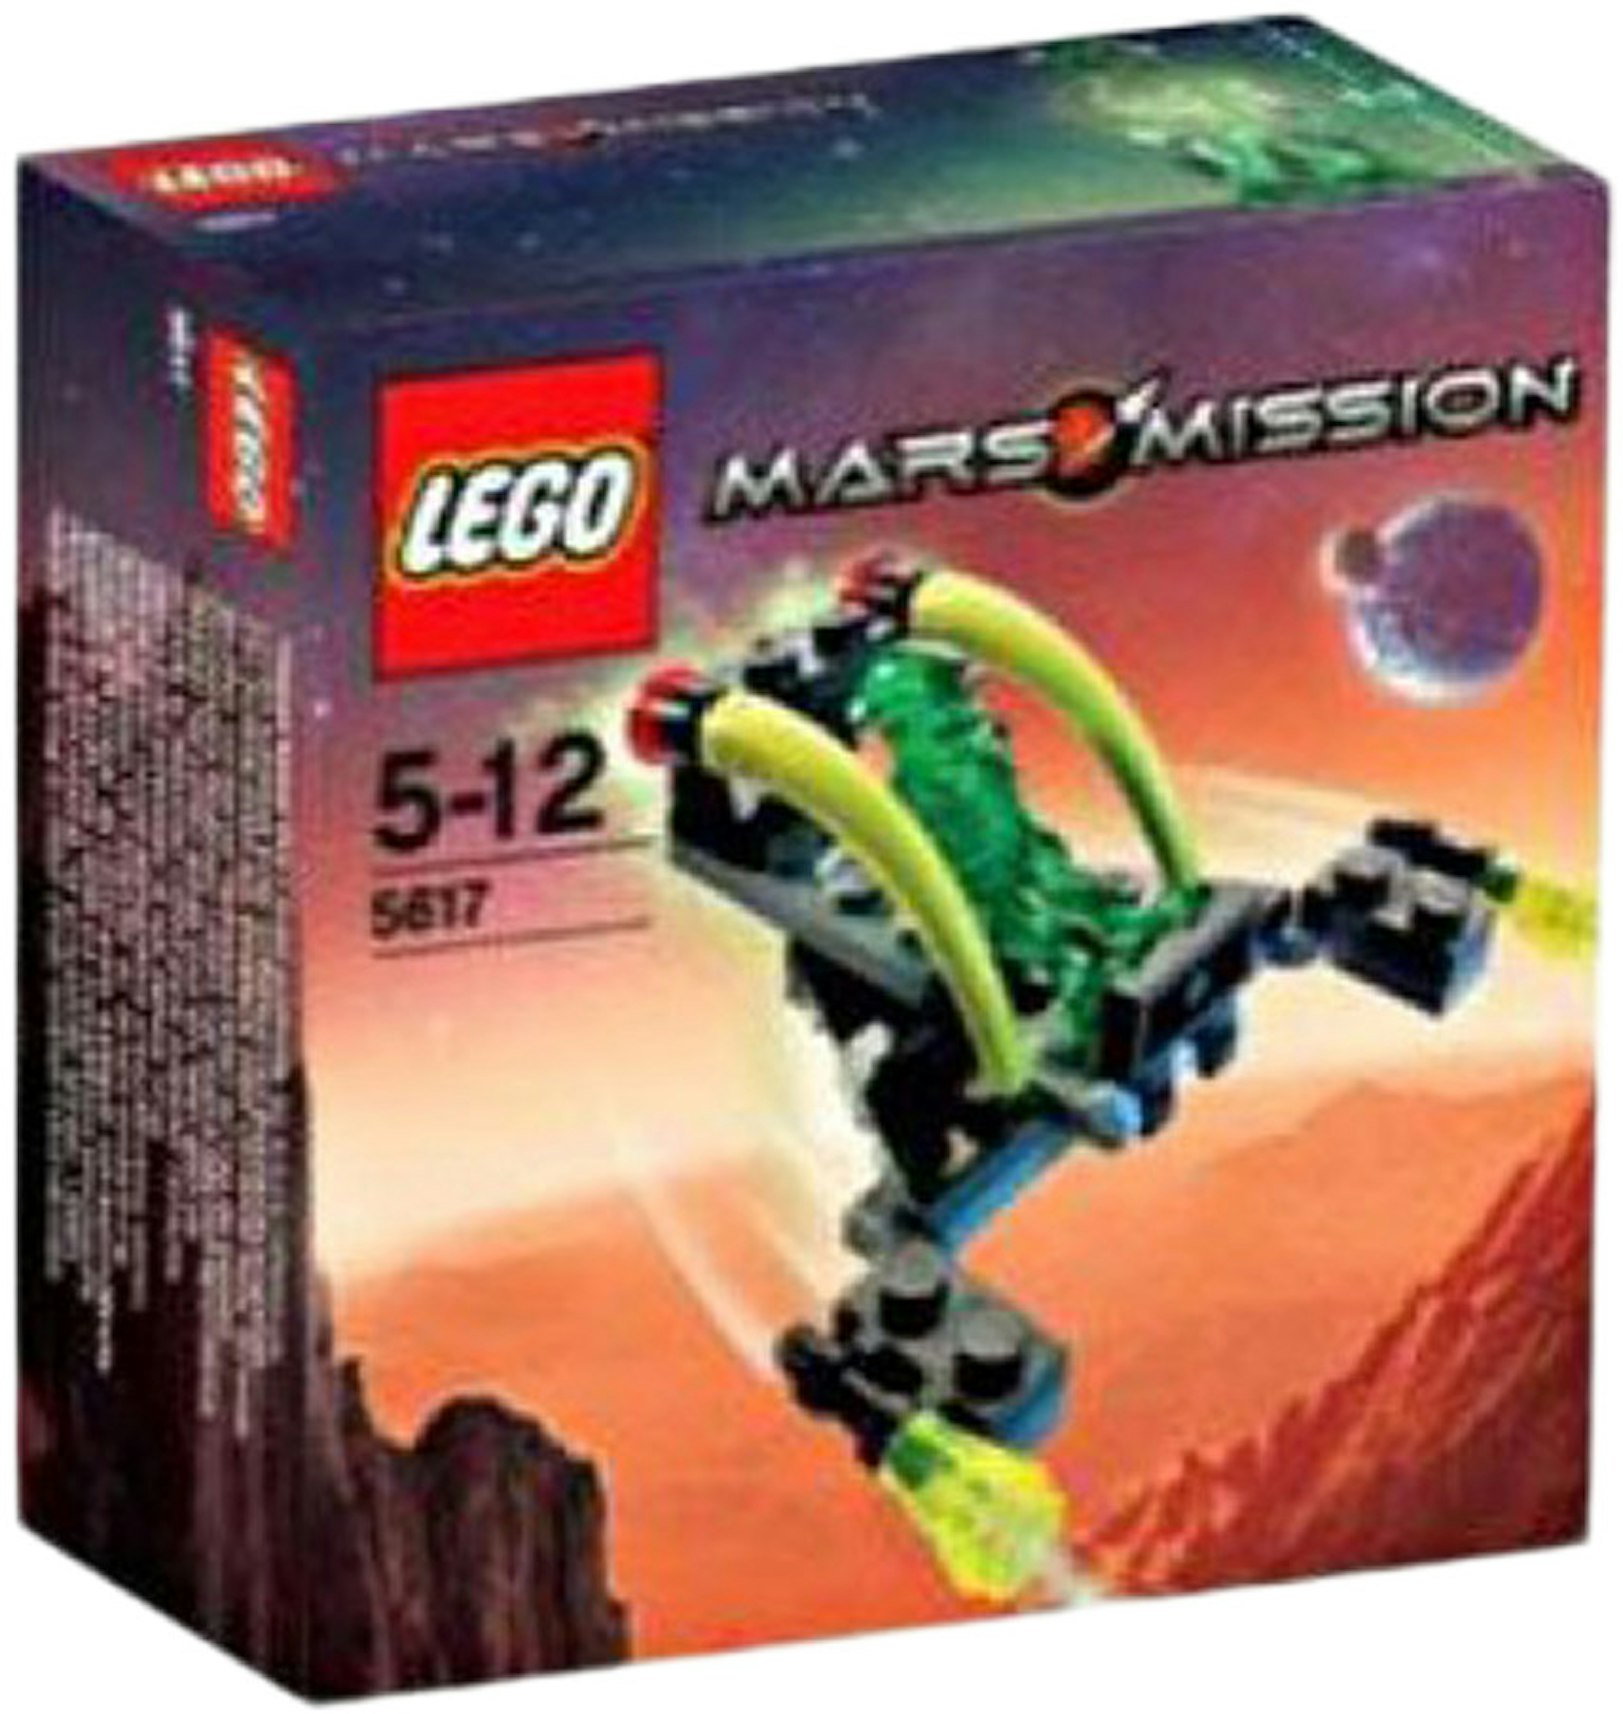 LEGO Mars Mission Alien Jet 5617 - US